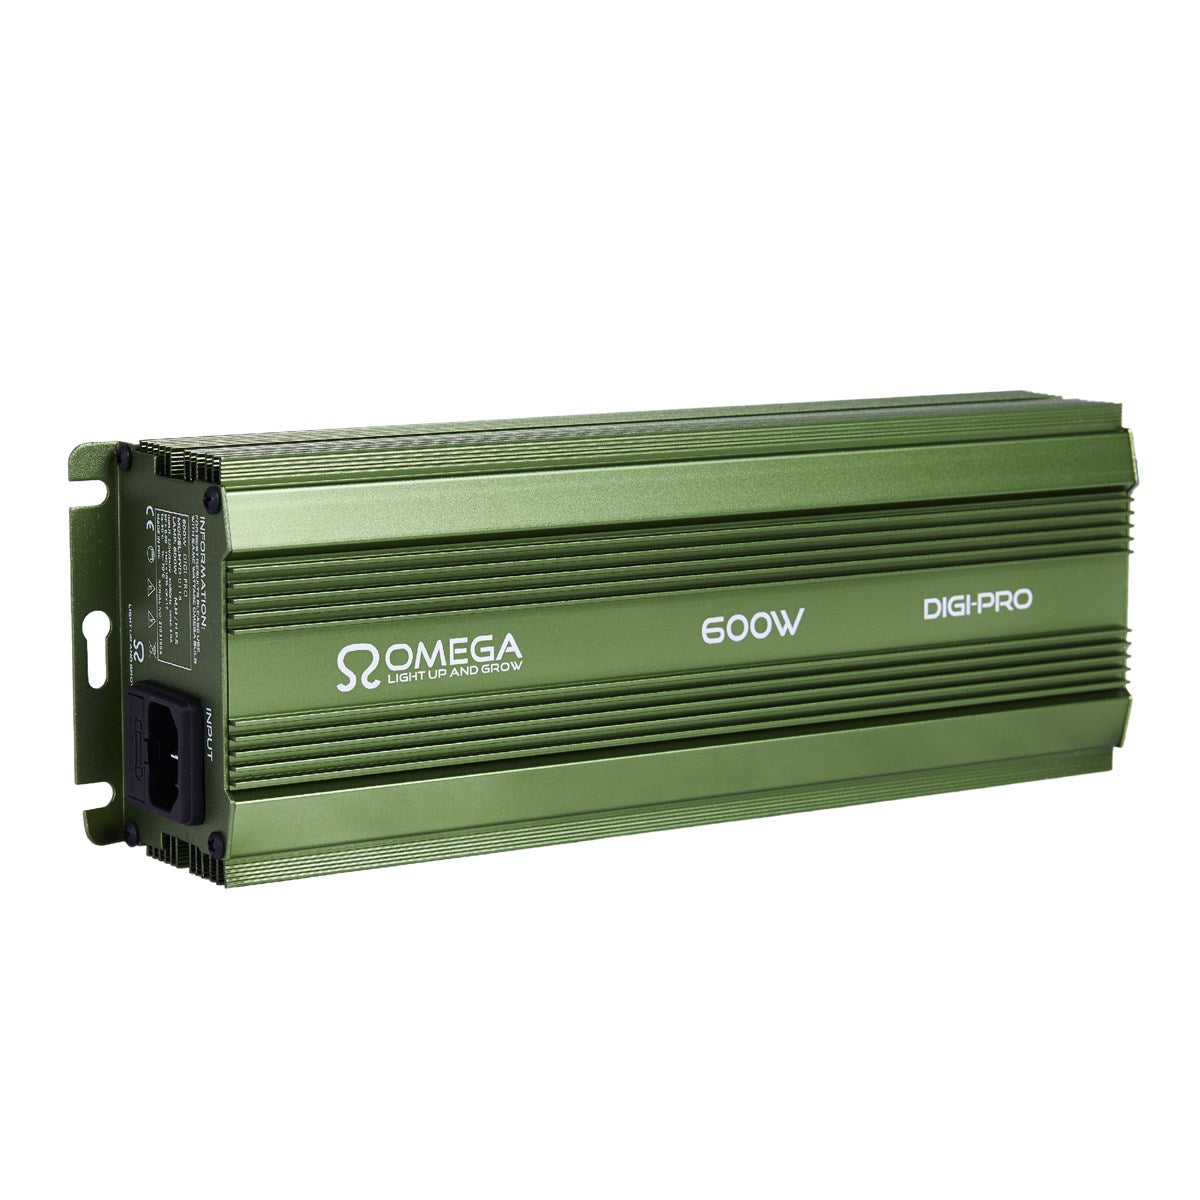 Omega 600W Digi-Pro Digital Dimmable Ballast